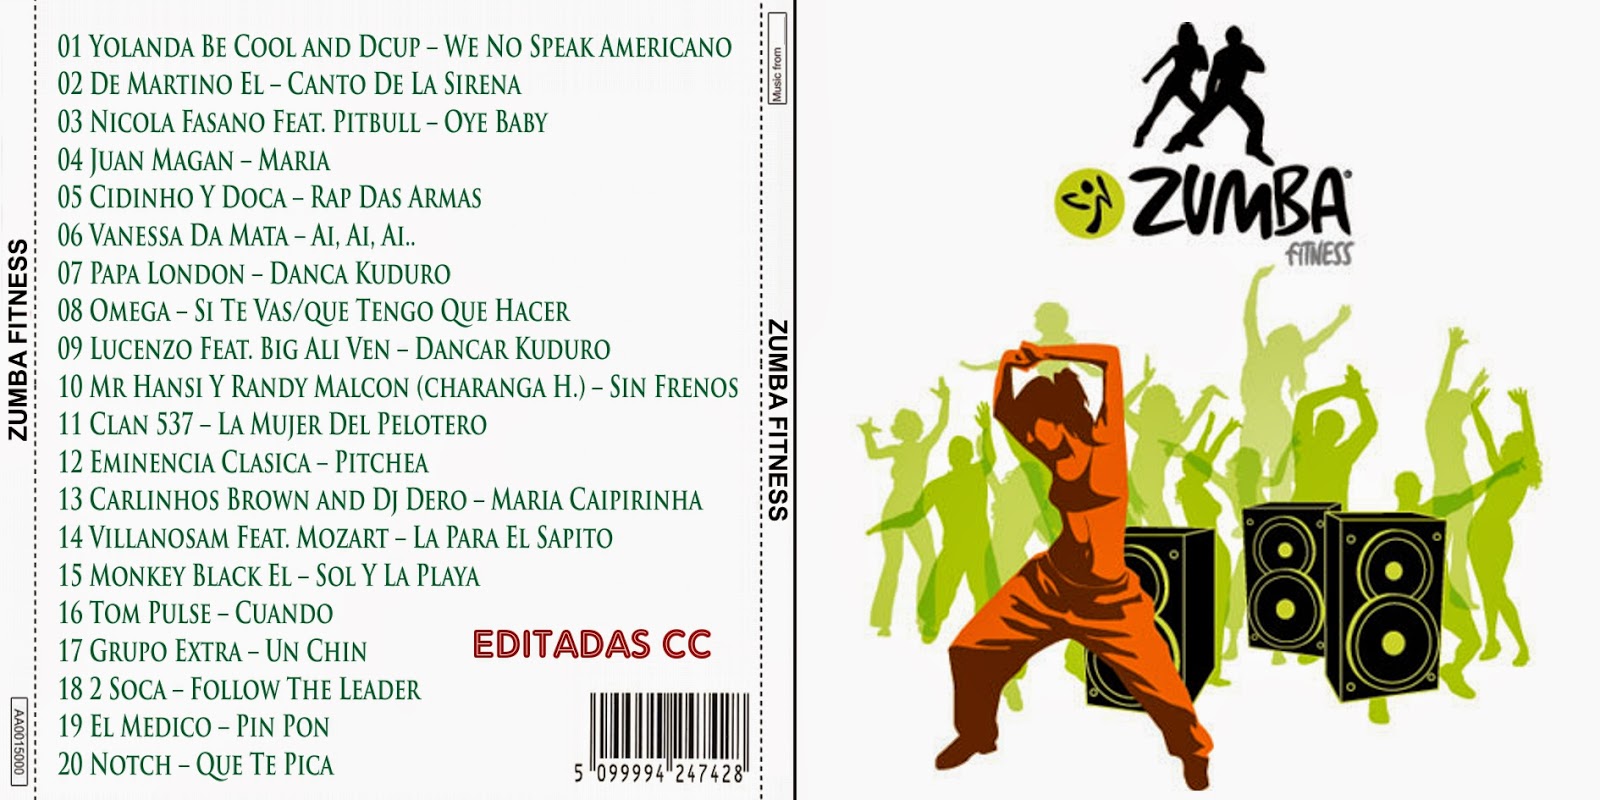 EDITADAS CC: CD ZUMBA FITNESS (2011)